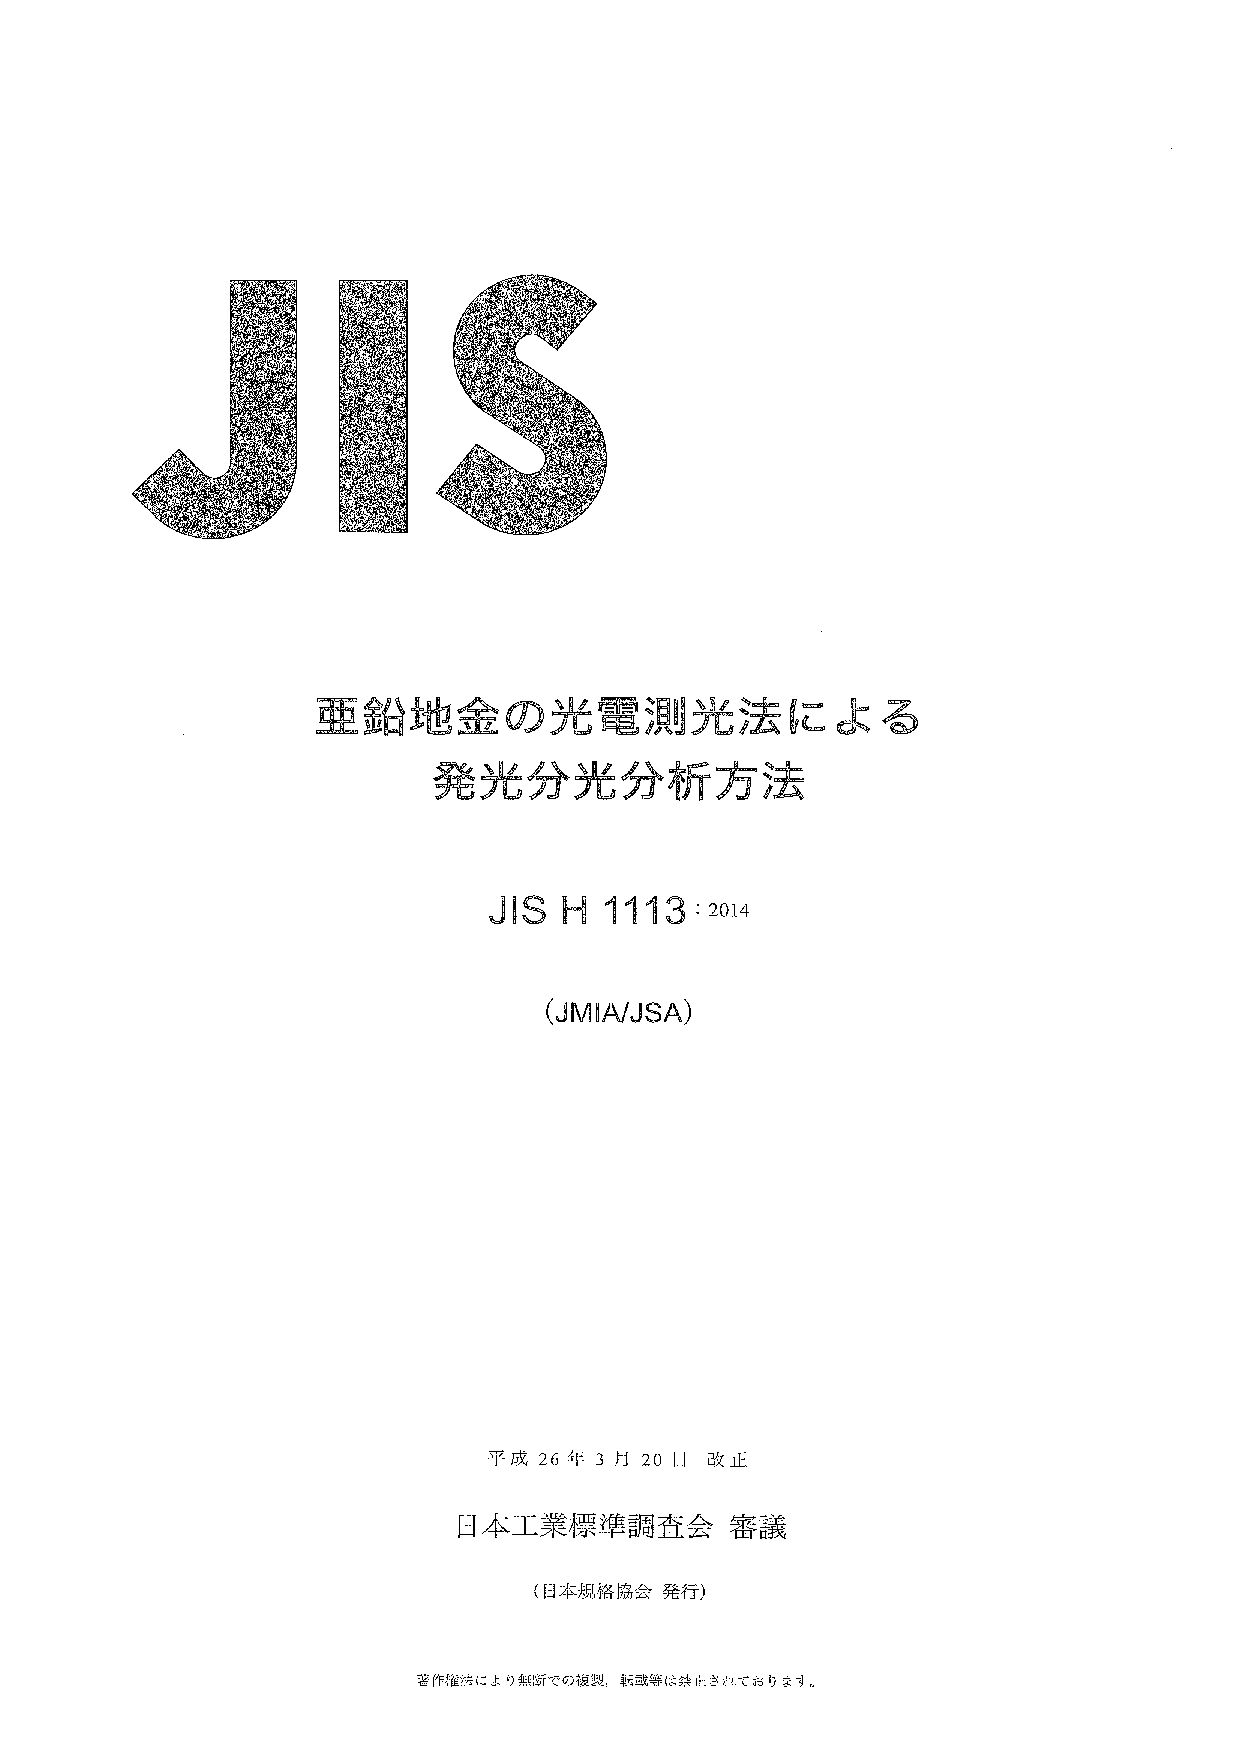 JIS H 1113:2014